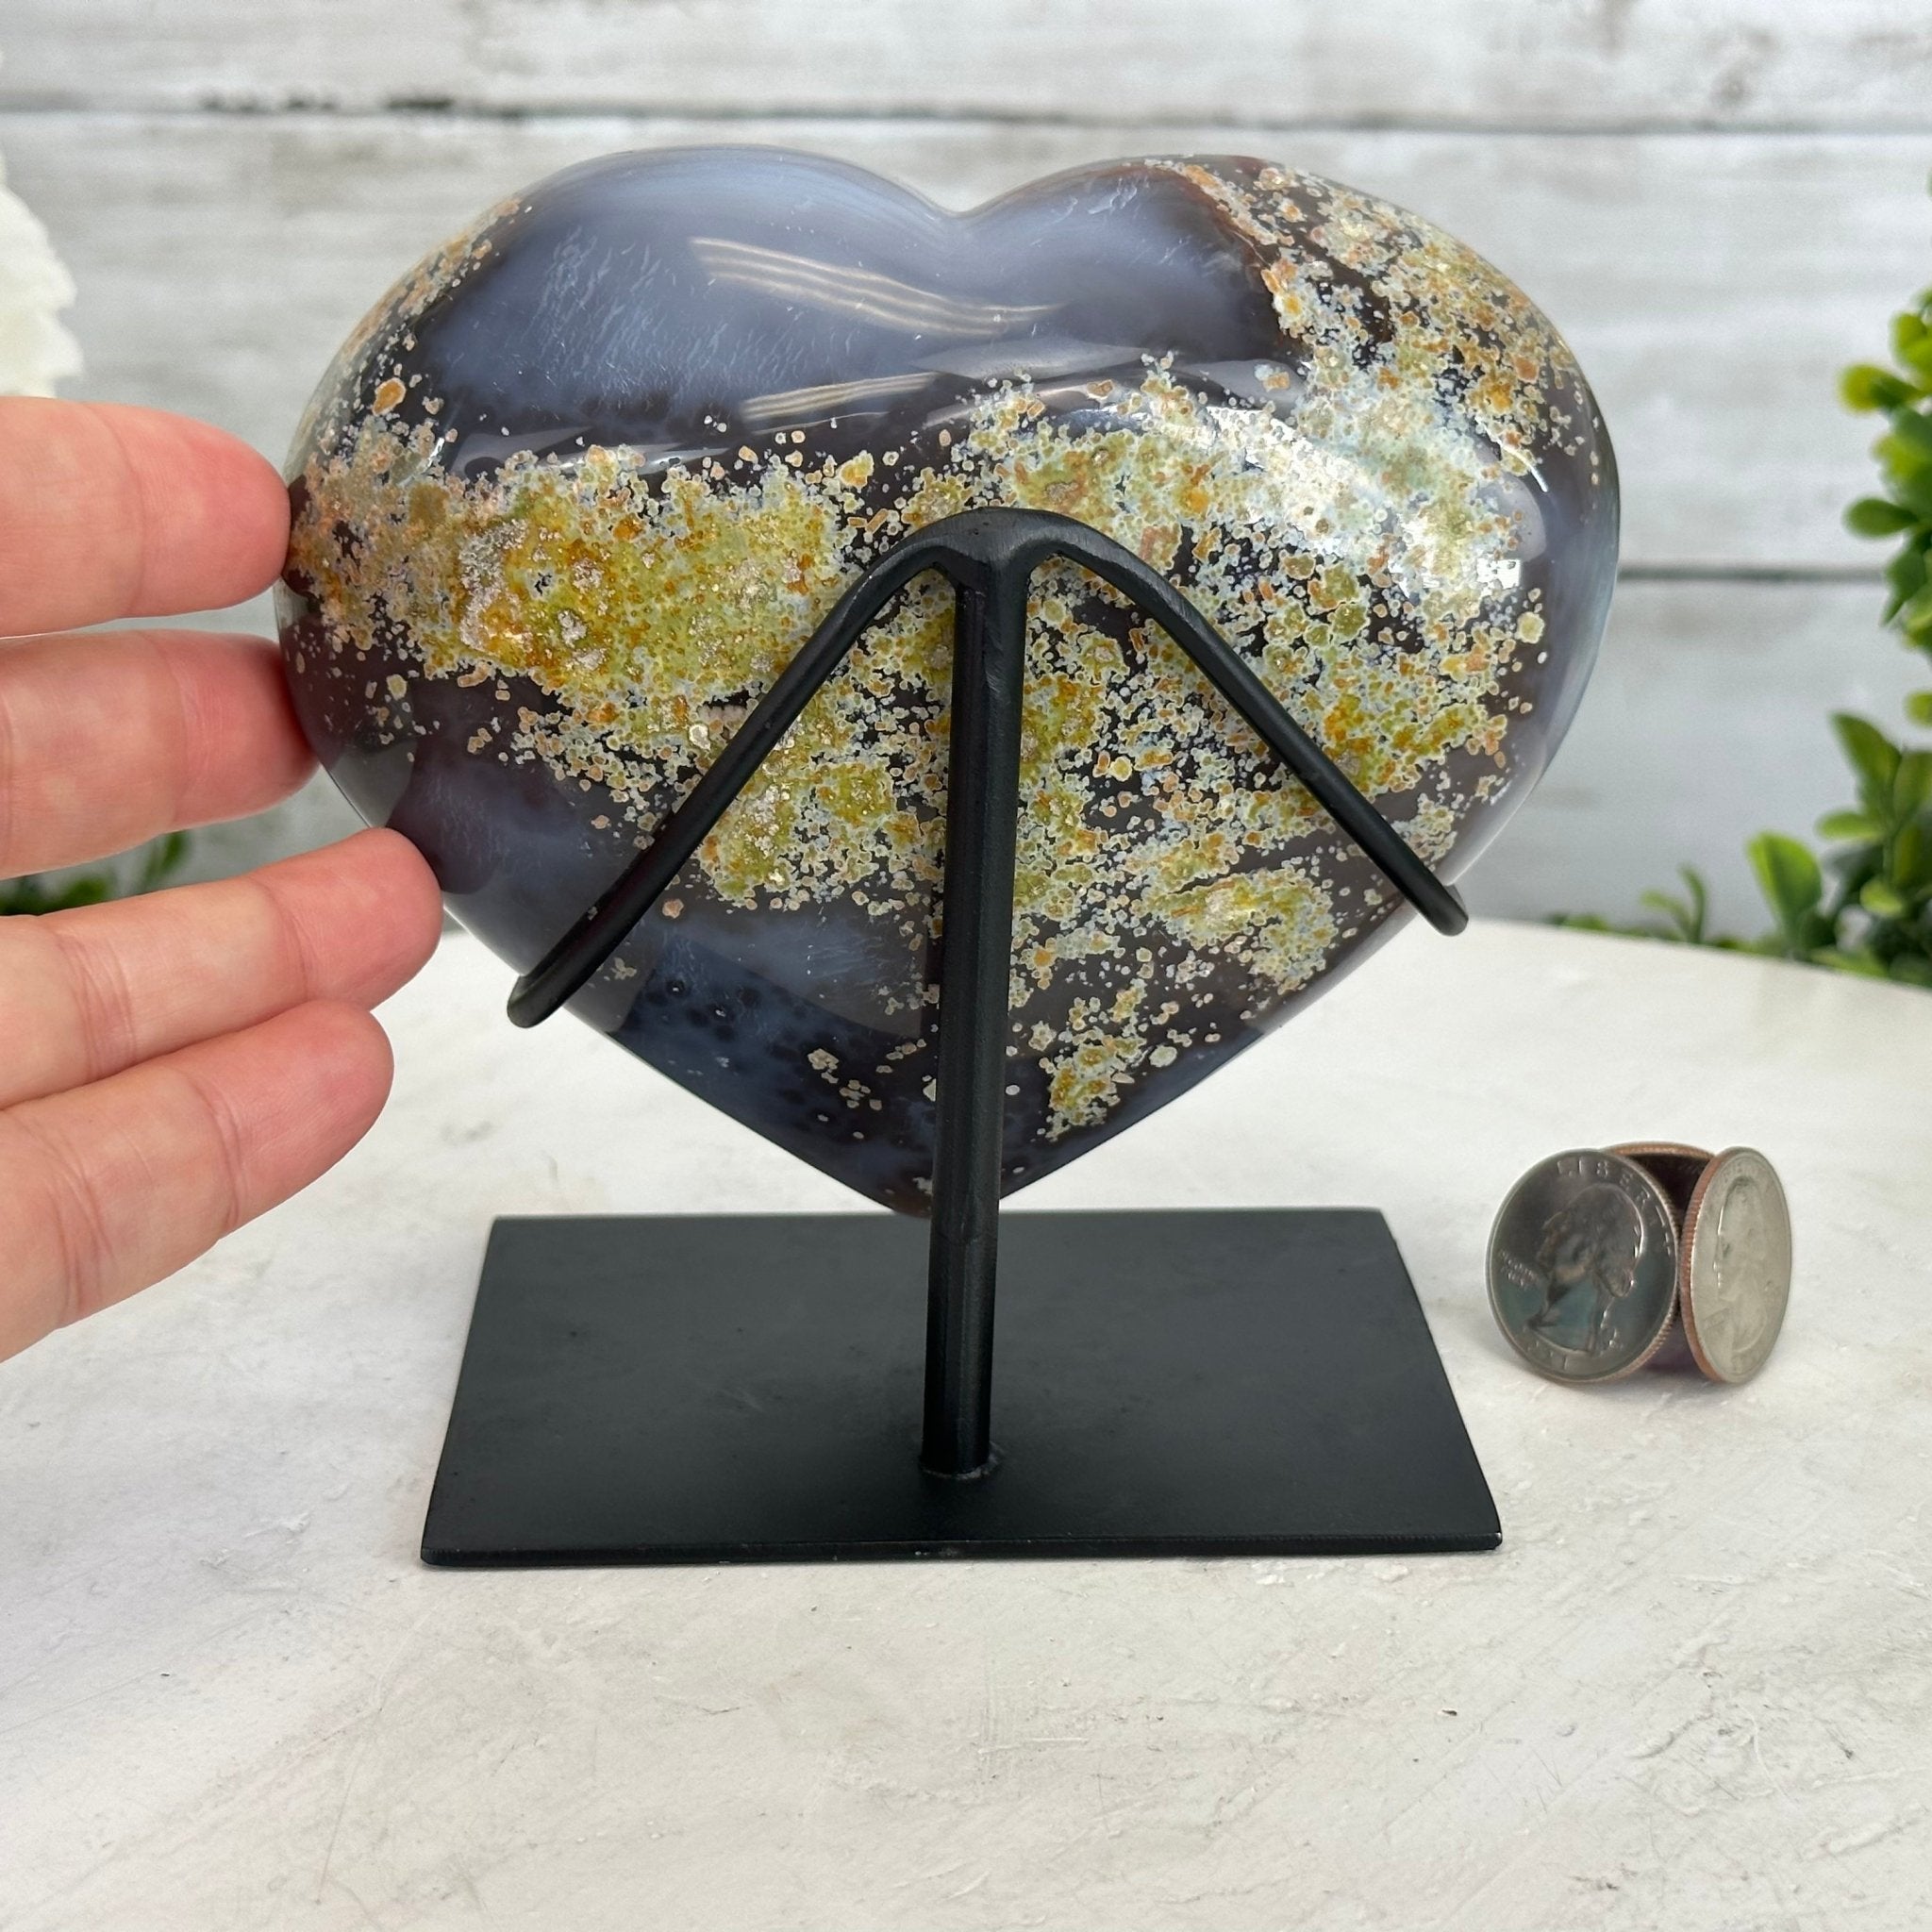 Polished Agate Heart Geode on a Metal Stand, 2.1 lbs & 5" Tall, Model #5468-0063 by Brazil Gems - Brazil GemsBrazil GemsPolished Agate Heart Geode on a Metal Stand, 2.1 lbs & 5" Tall, Model #5468-0063 by Brazil GemsHearts5468-0063